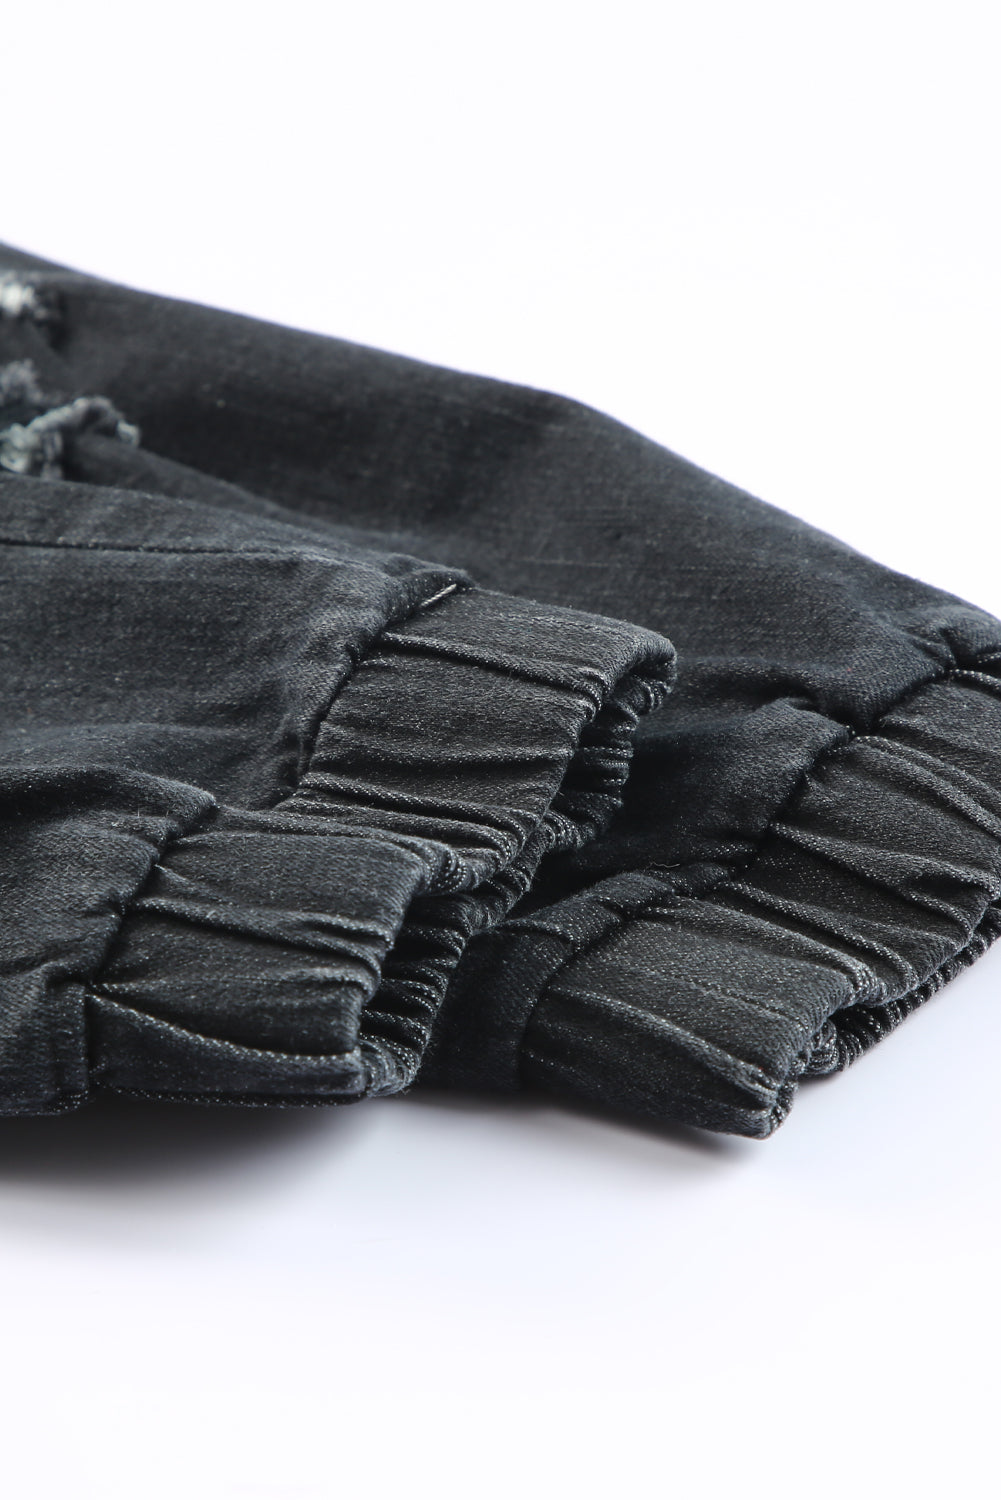 Black Pocketed Distressed Denim Jean